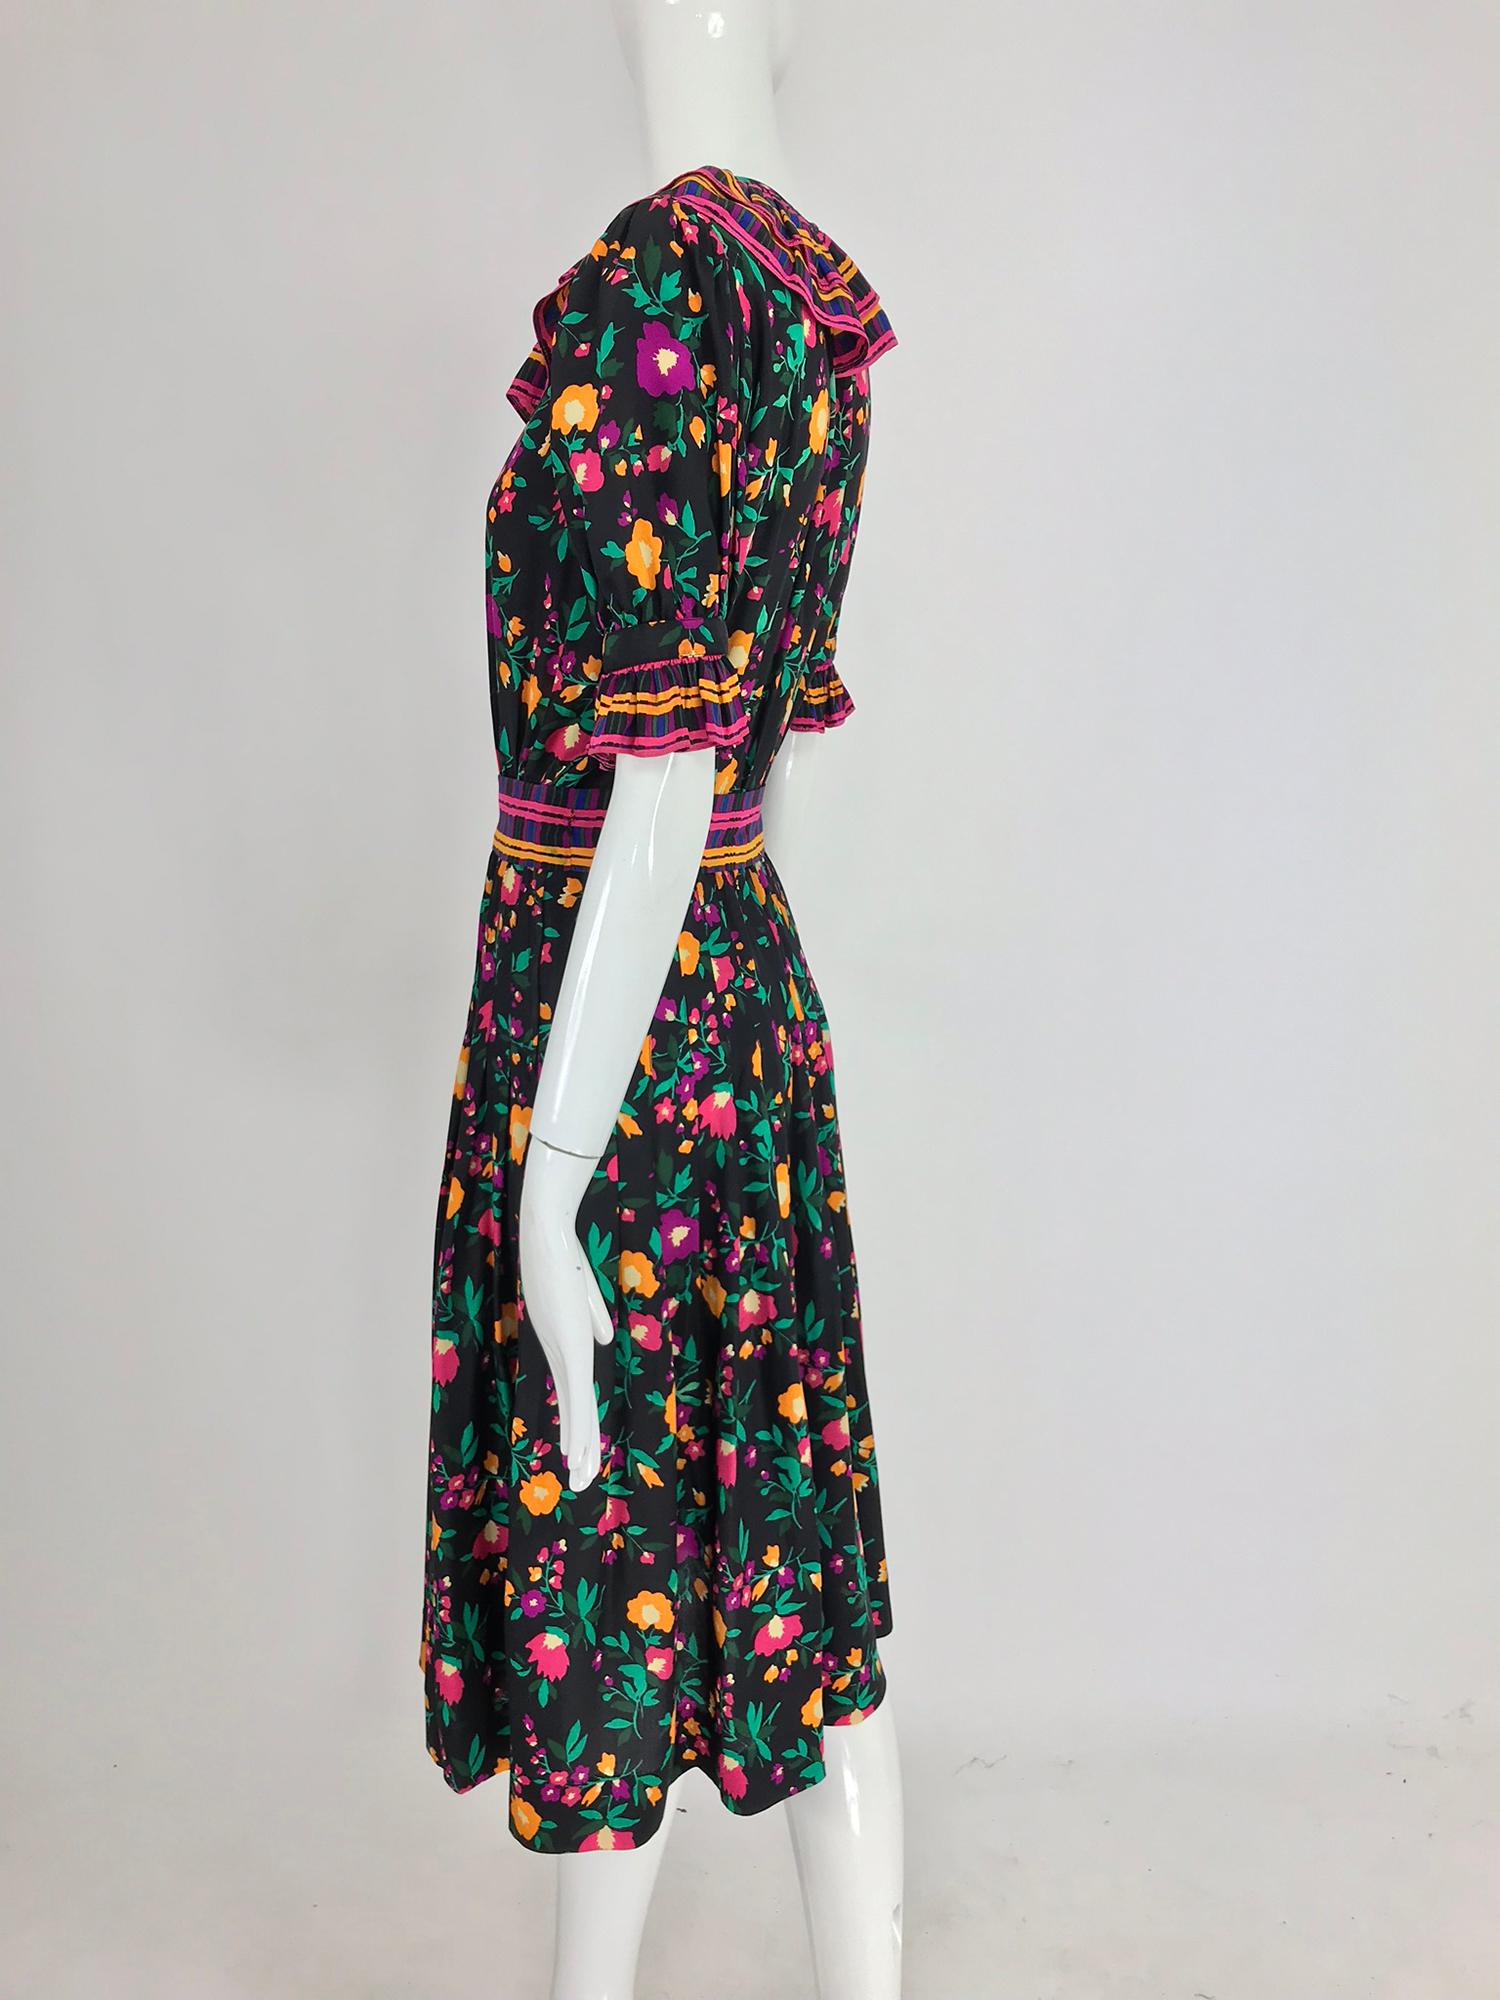 Women's Yves Saint Laurent Rive Gauche floral silk mix print dress 1970s